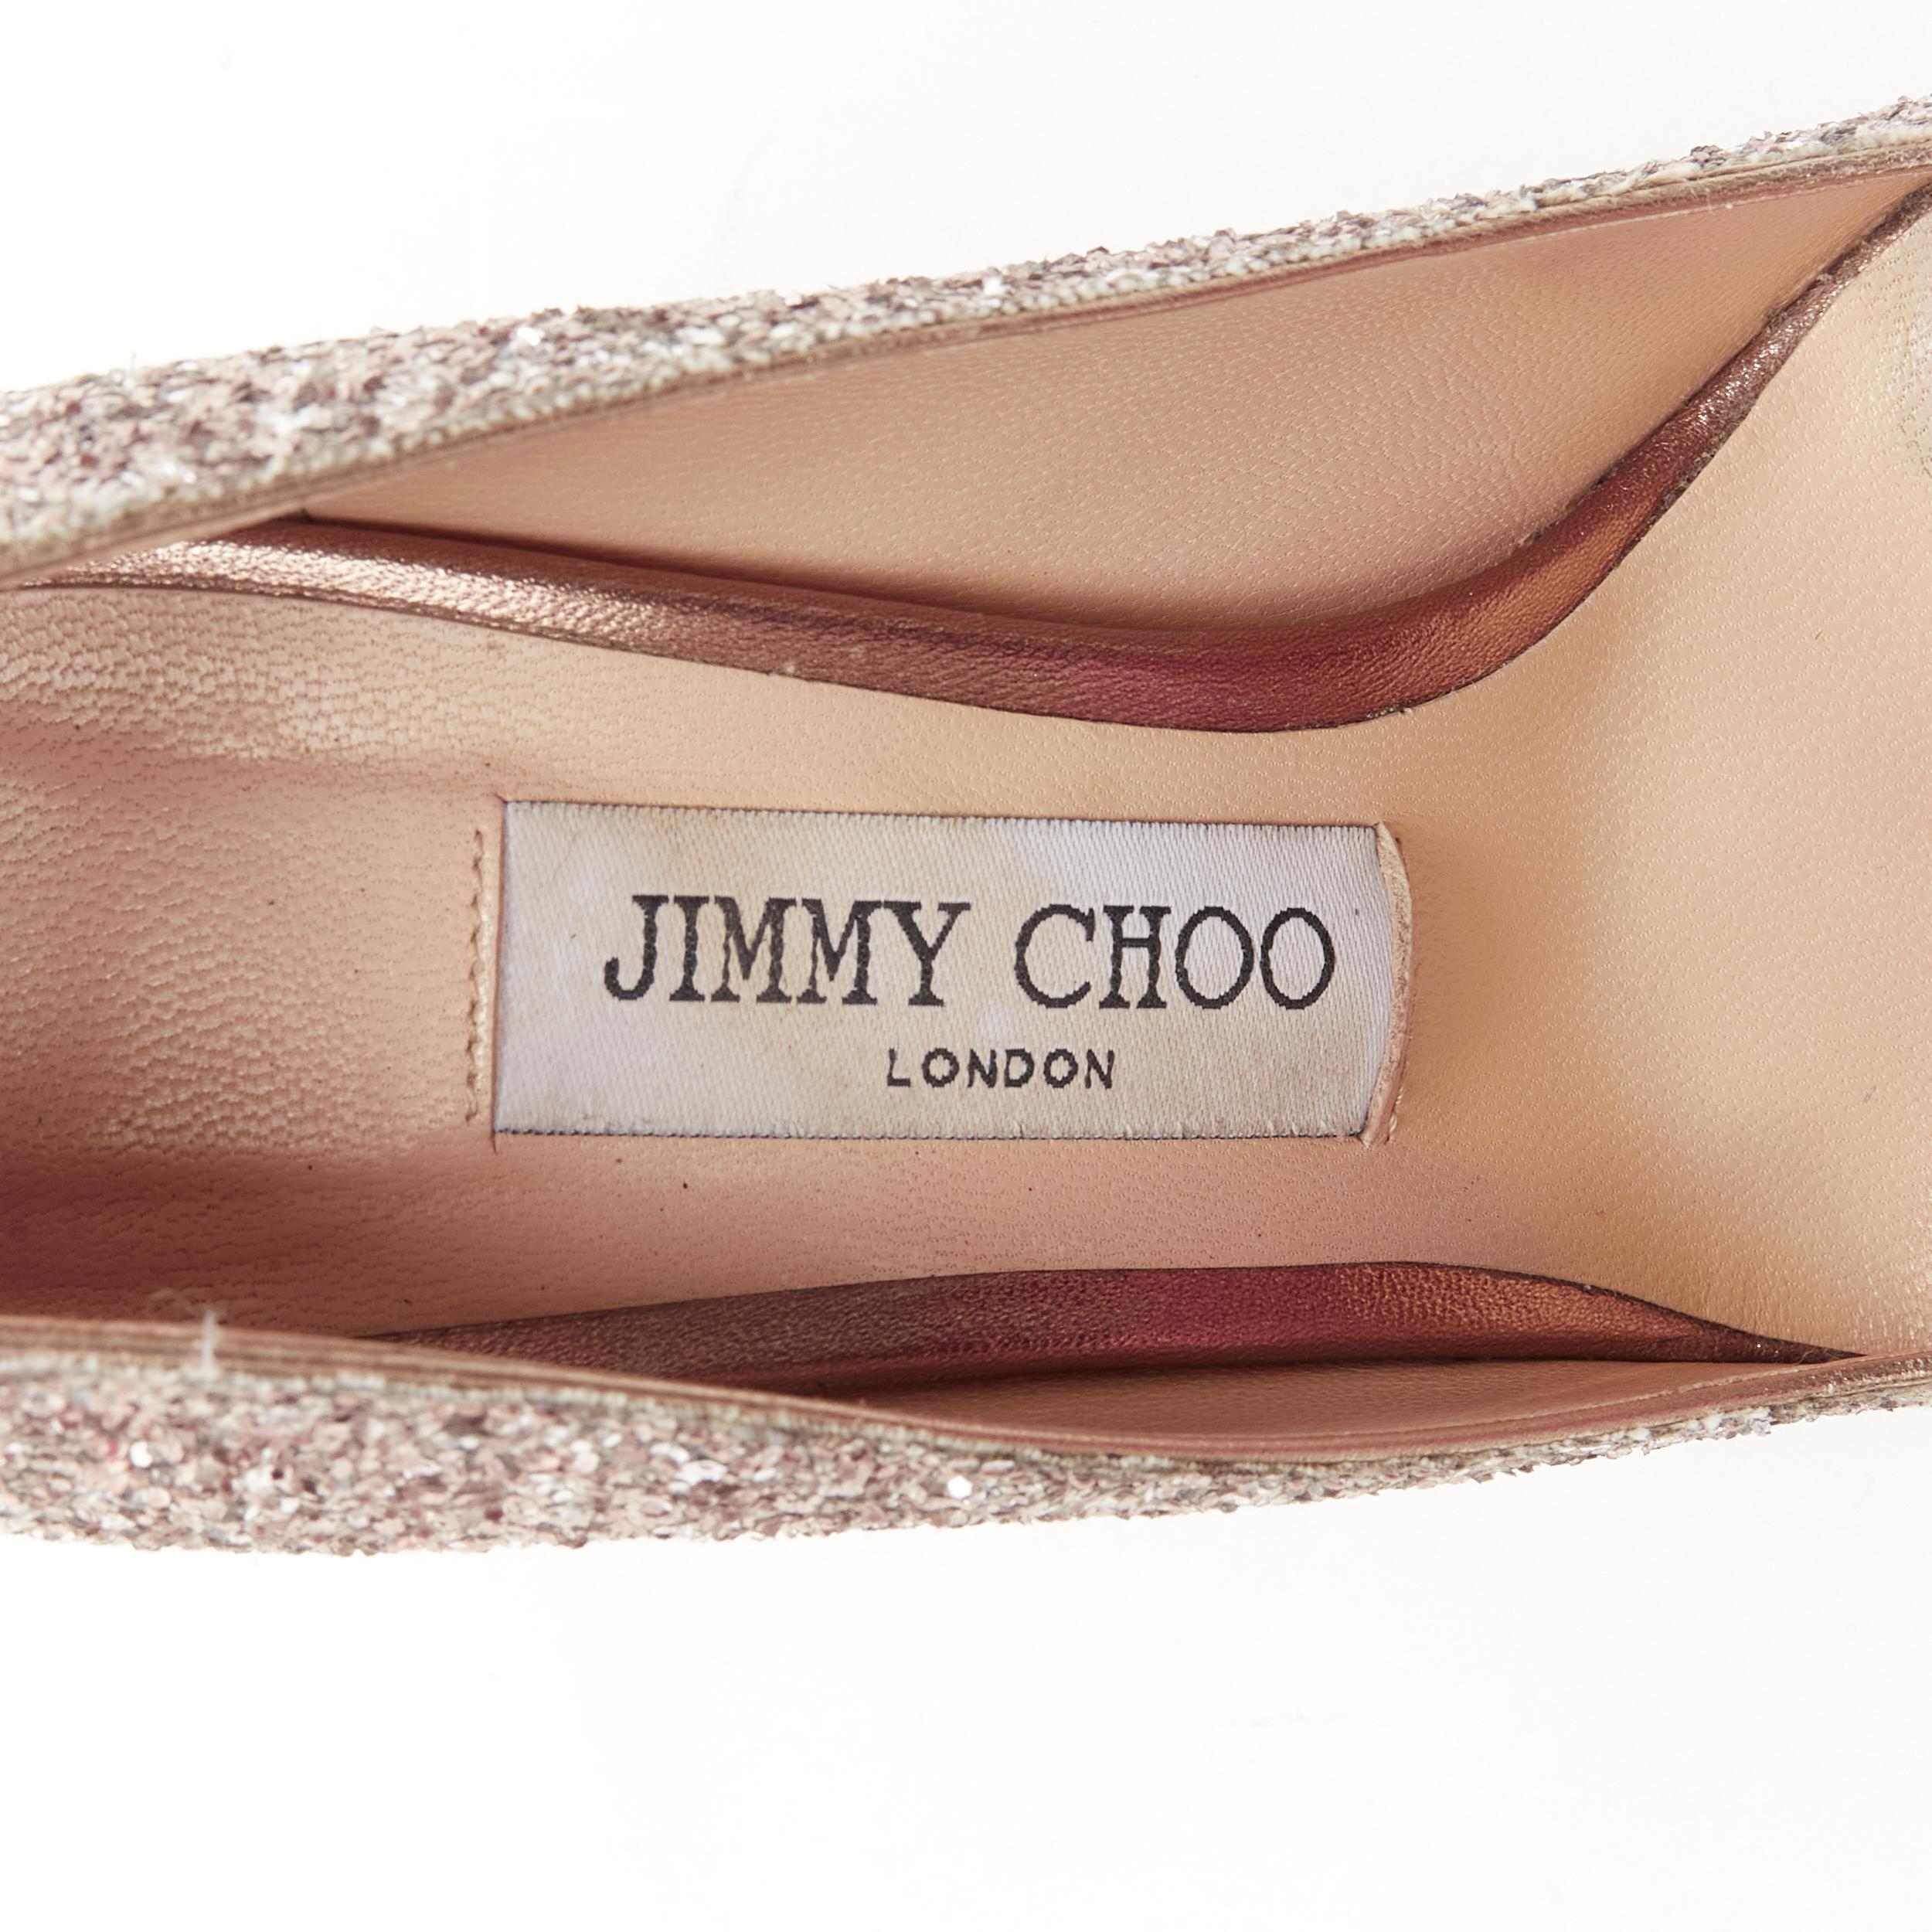 JIMMY CHOO rose gold course glitter covered metal heel pigalle pump EU36 1